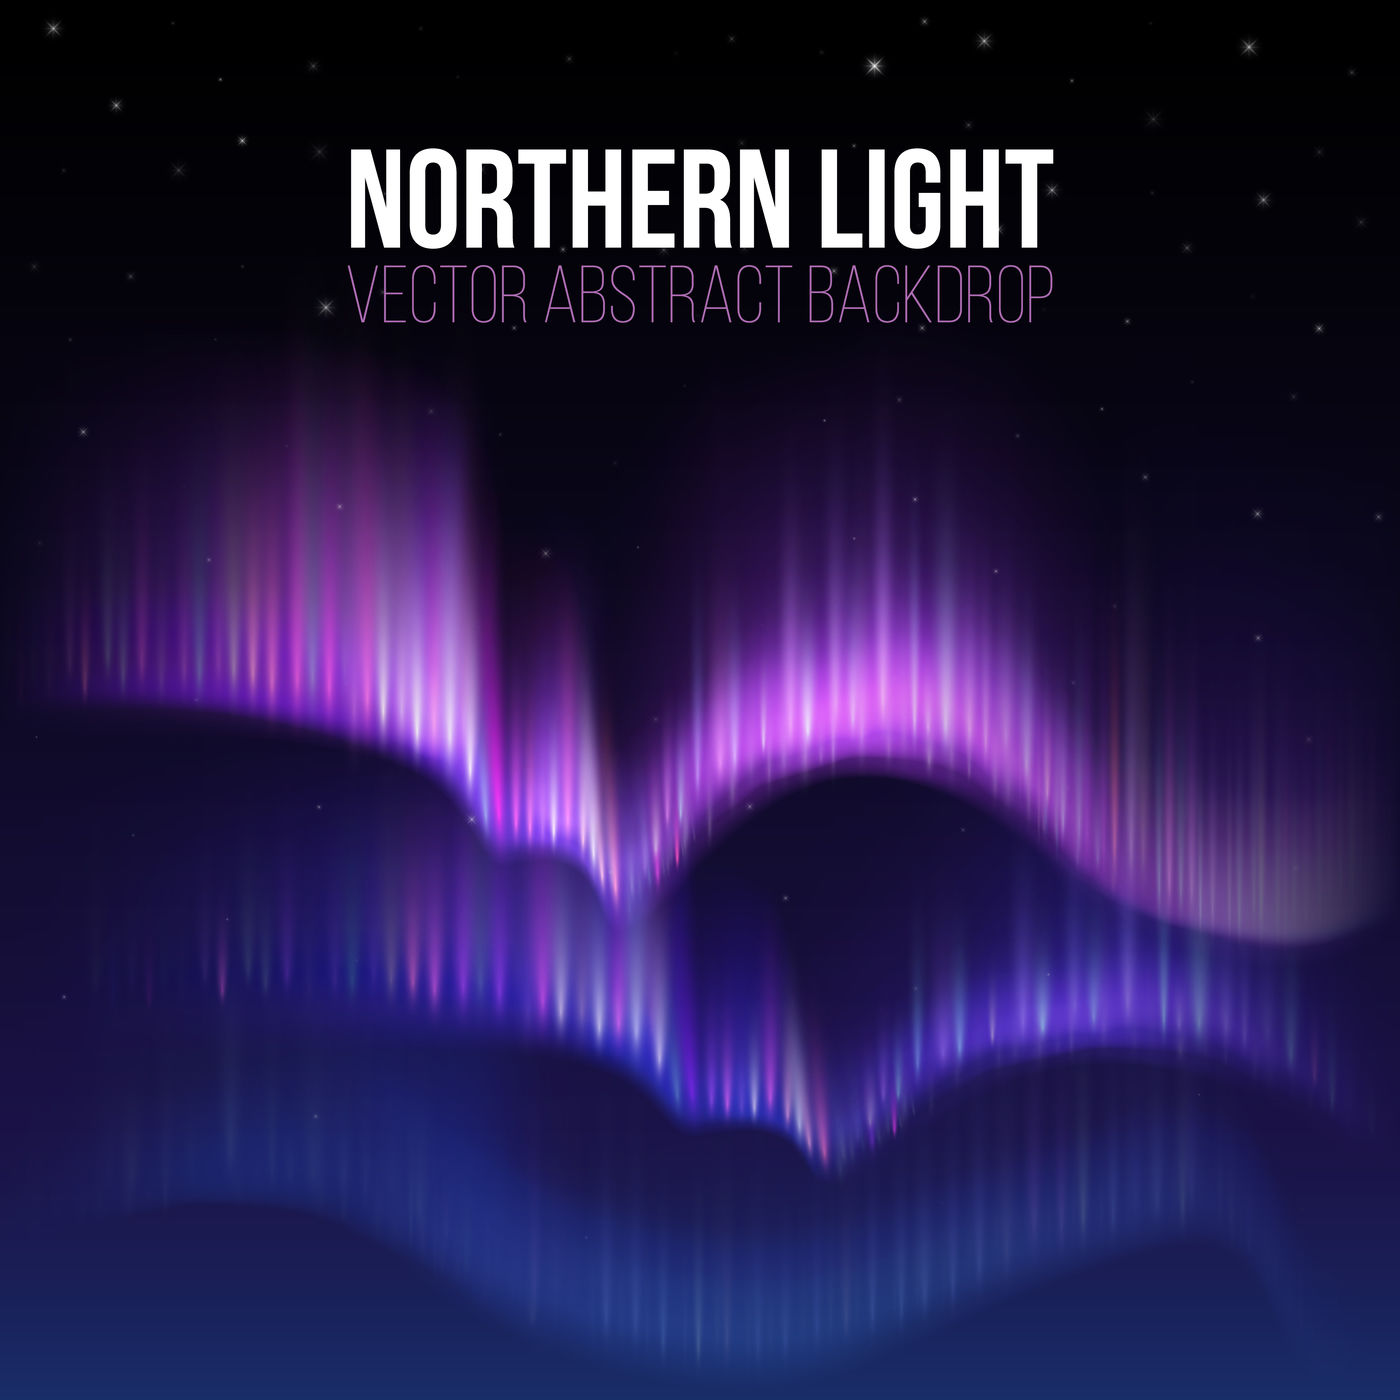 Arctic Aurora Northern Lights In Polaris Alaska Vector Background By Microvector Thehungryjpeg Com